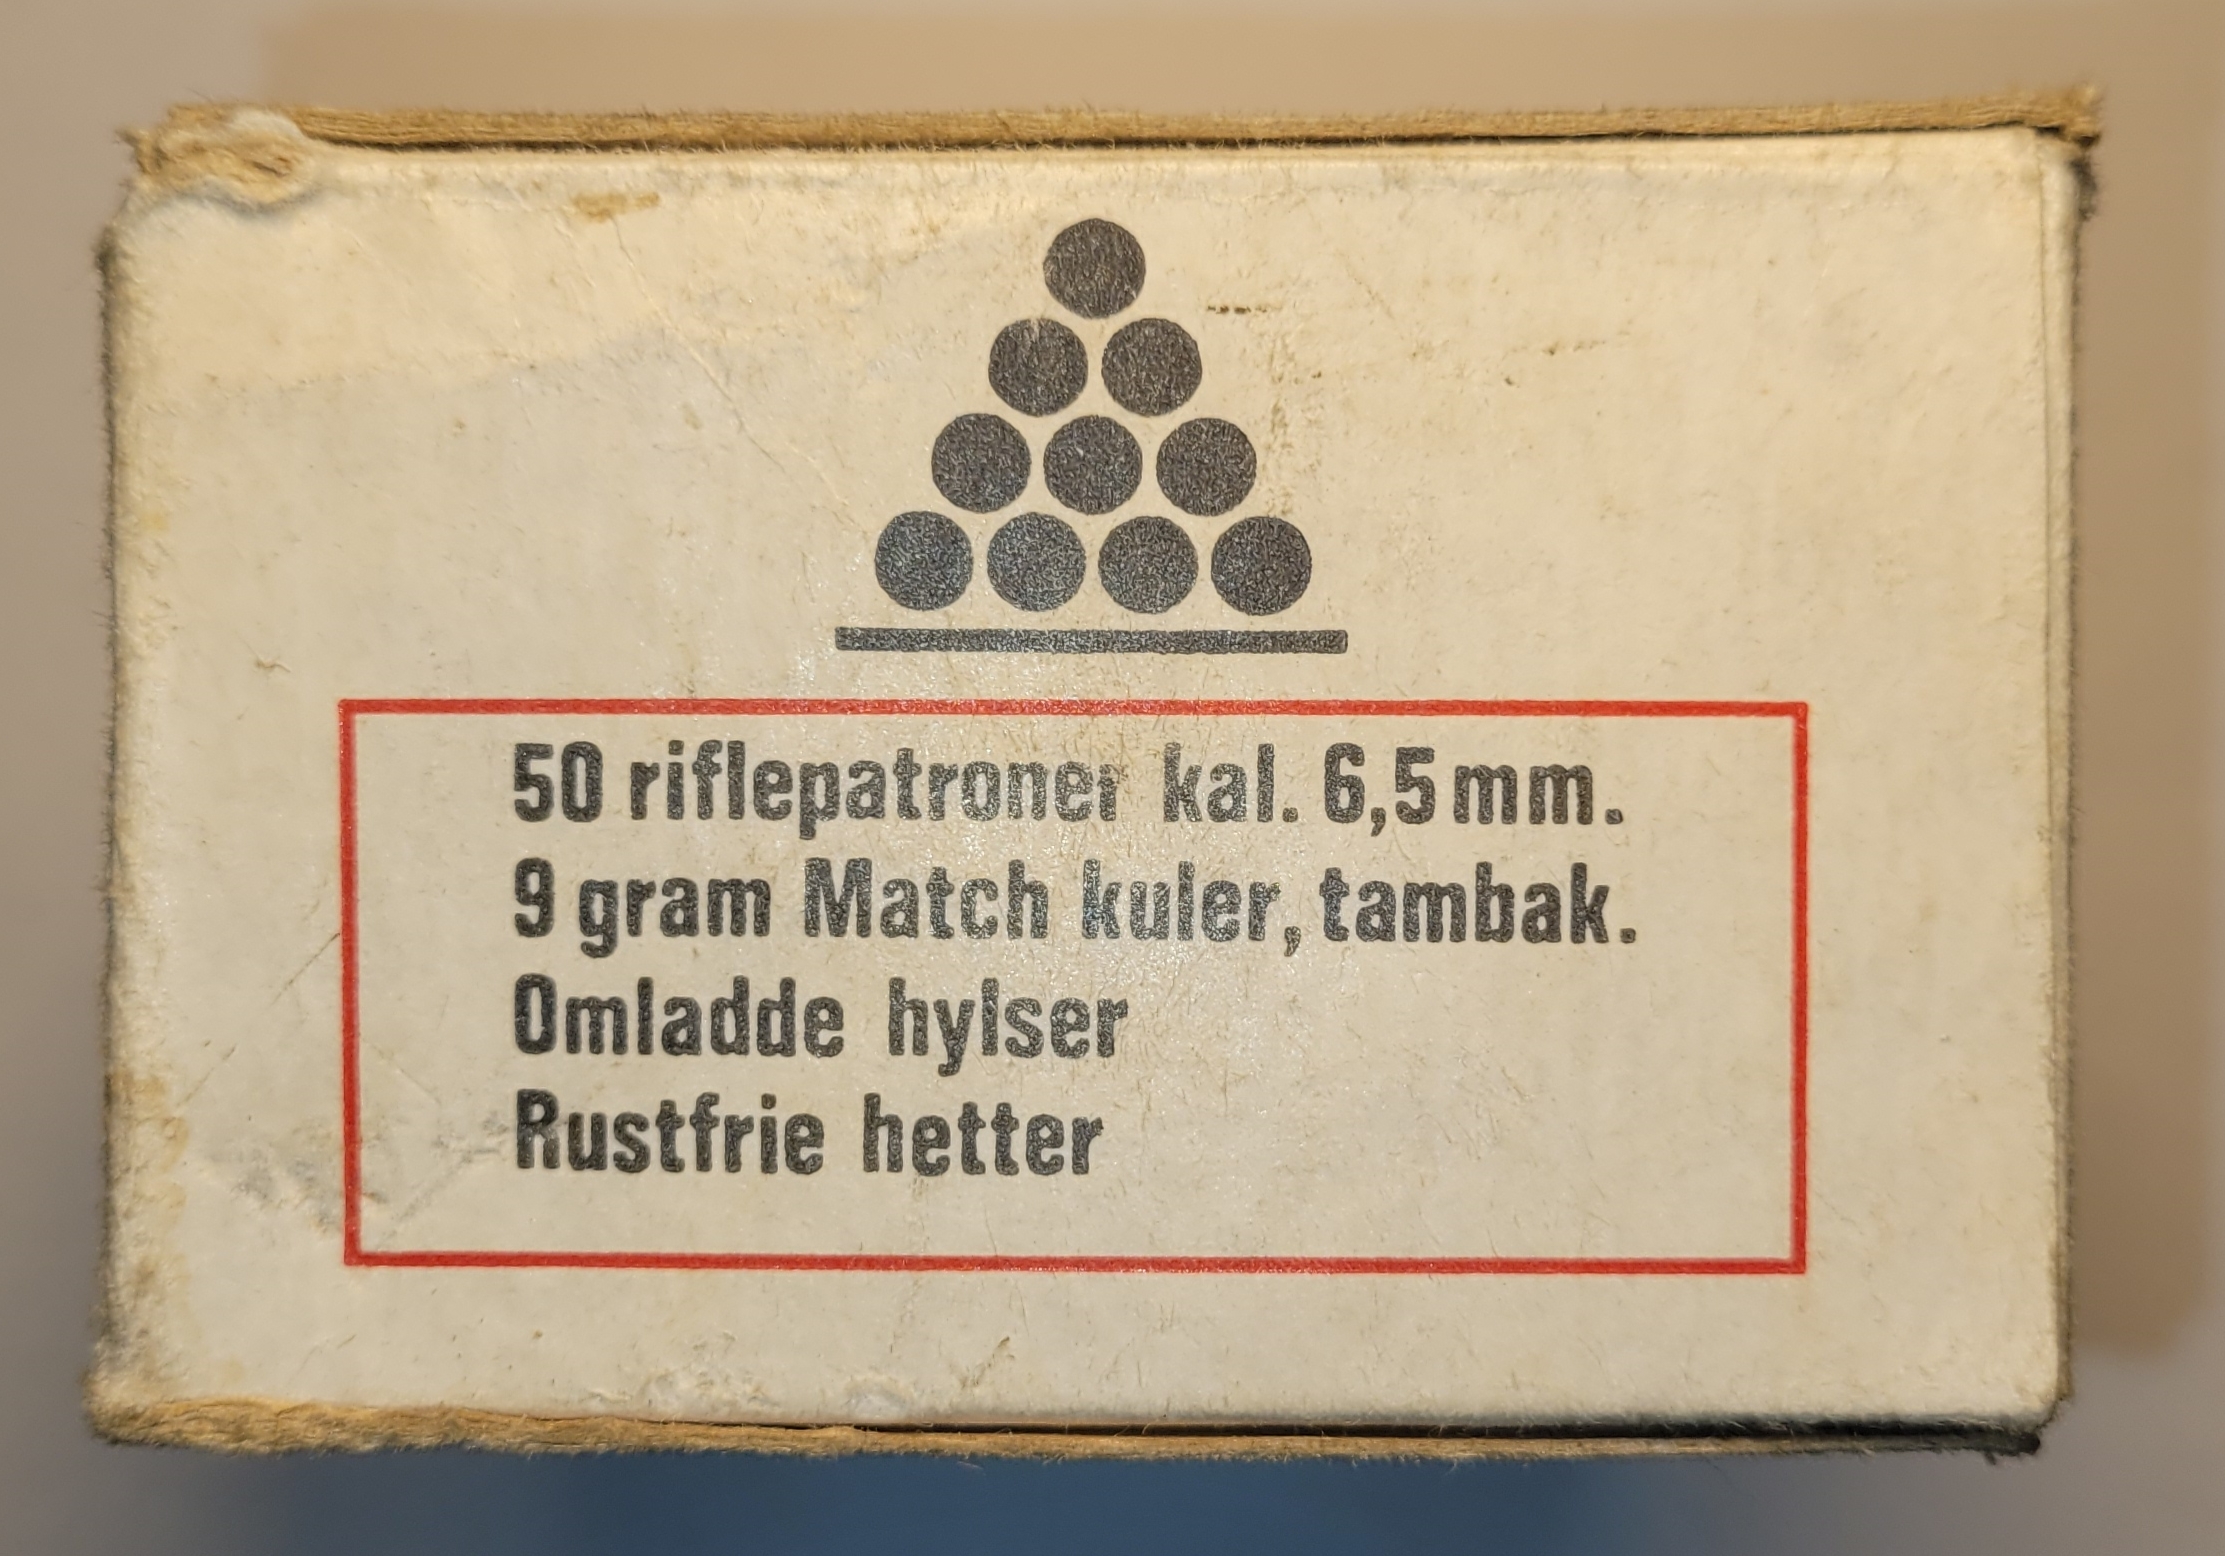 ./ammo/65x55/esker/Eske-65x55-RANO-50skudd-Helmantel-Tambak-Omladde-Hylser-4.jpg